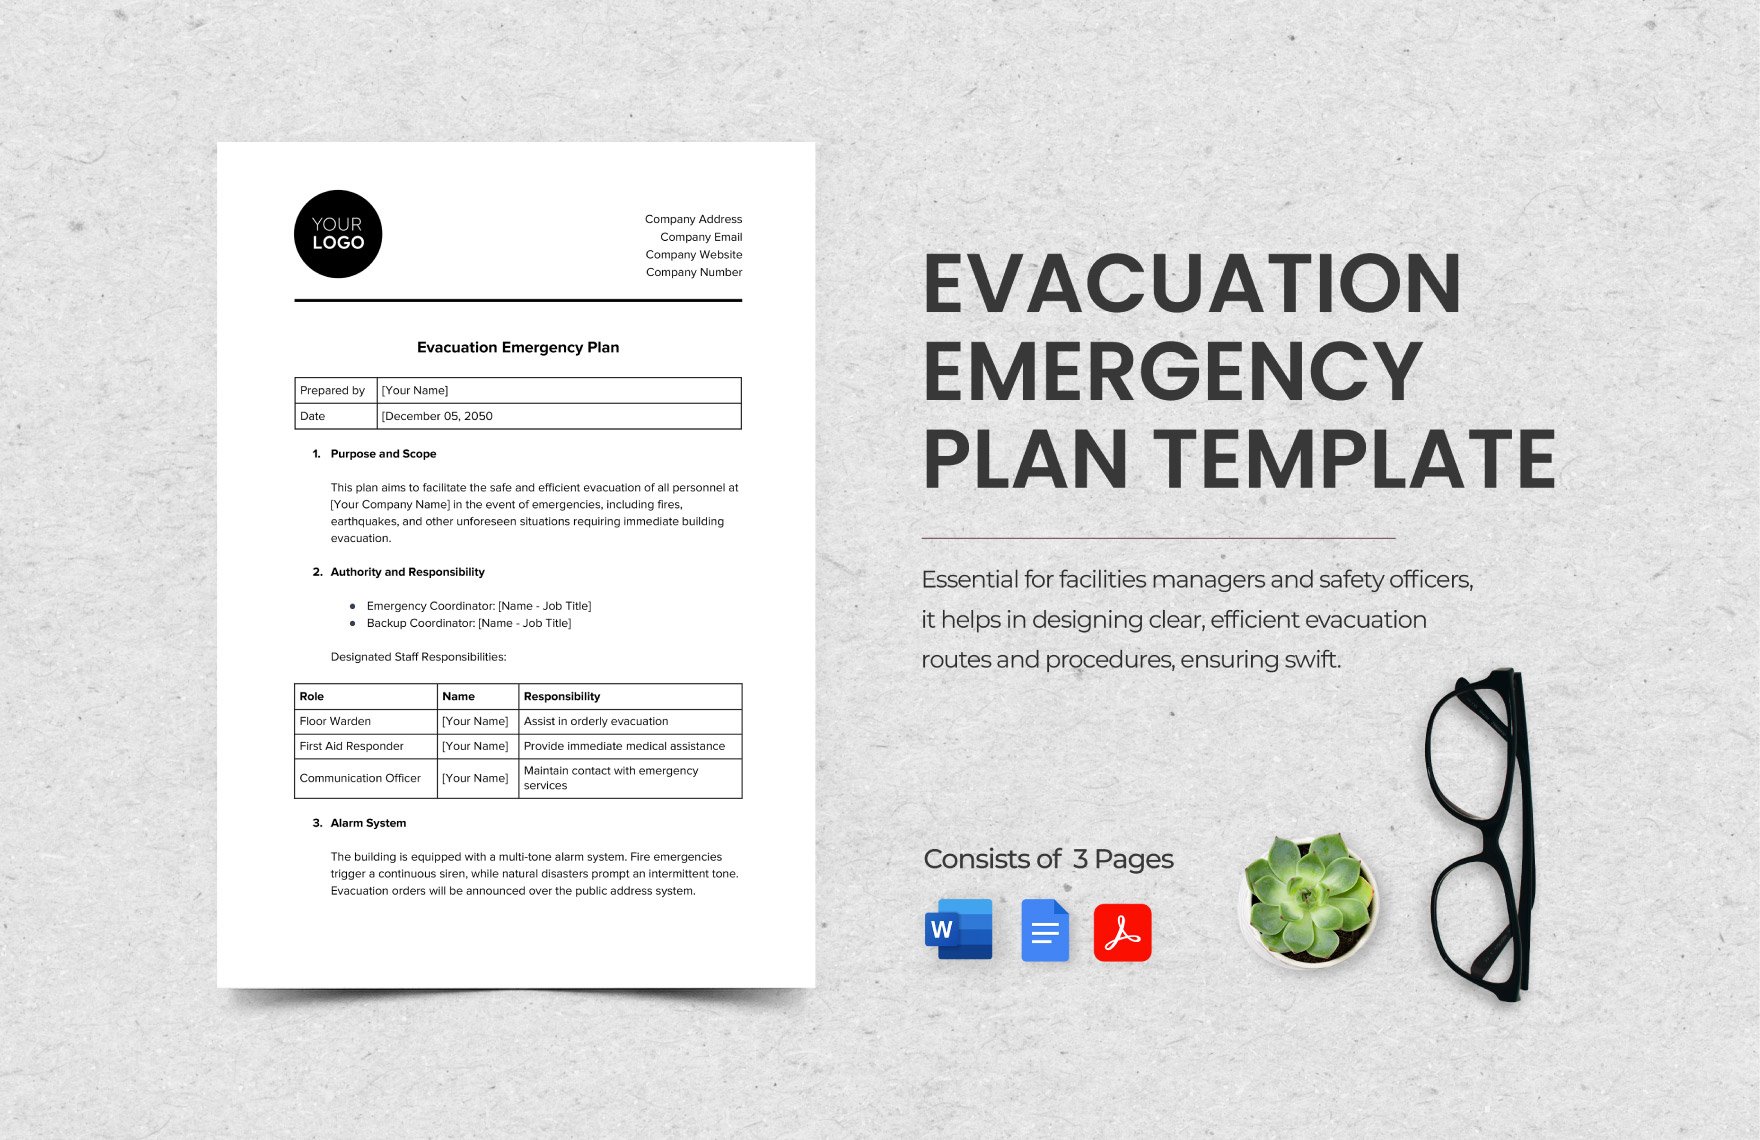 Evacuation Emergency Plan Template in Word, Google Docs, PDF